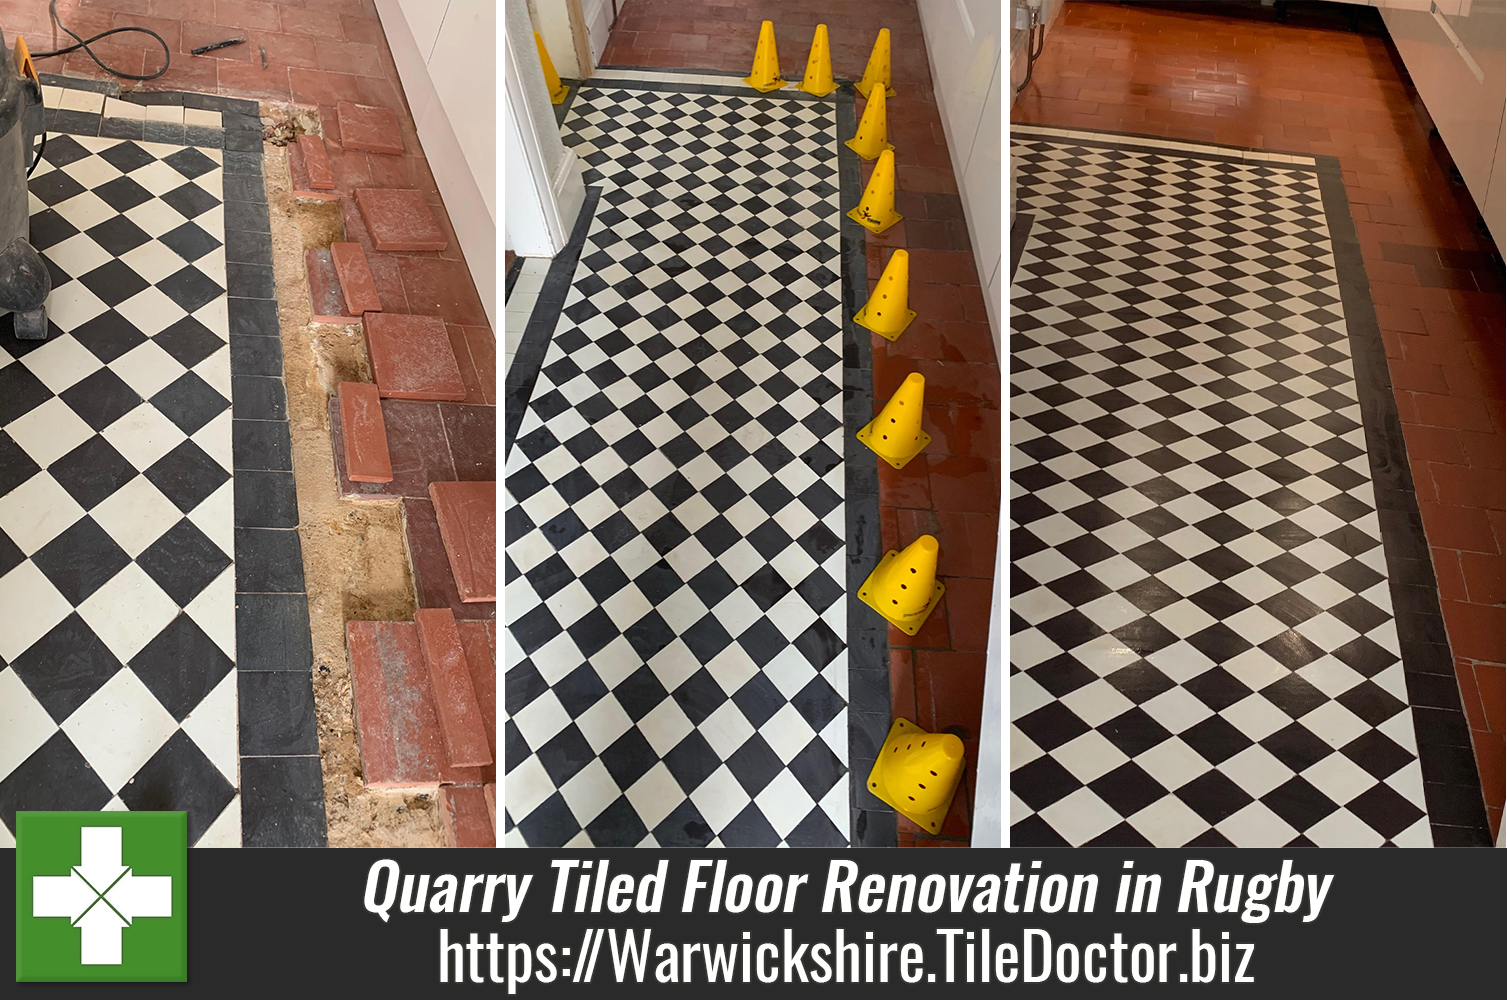 Quarry-Tiled-Kitchen-Floor-Tiles-Before-After-Renovation-Rugby